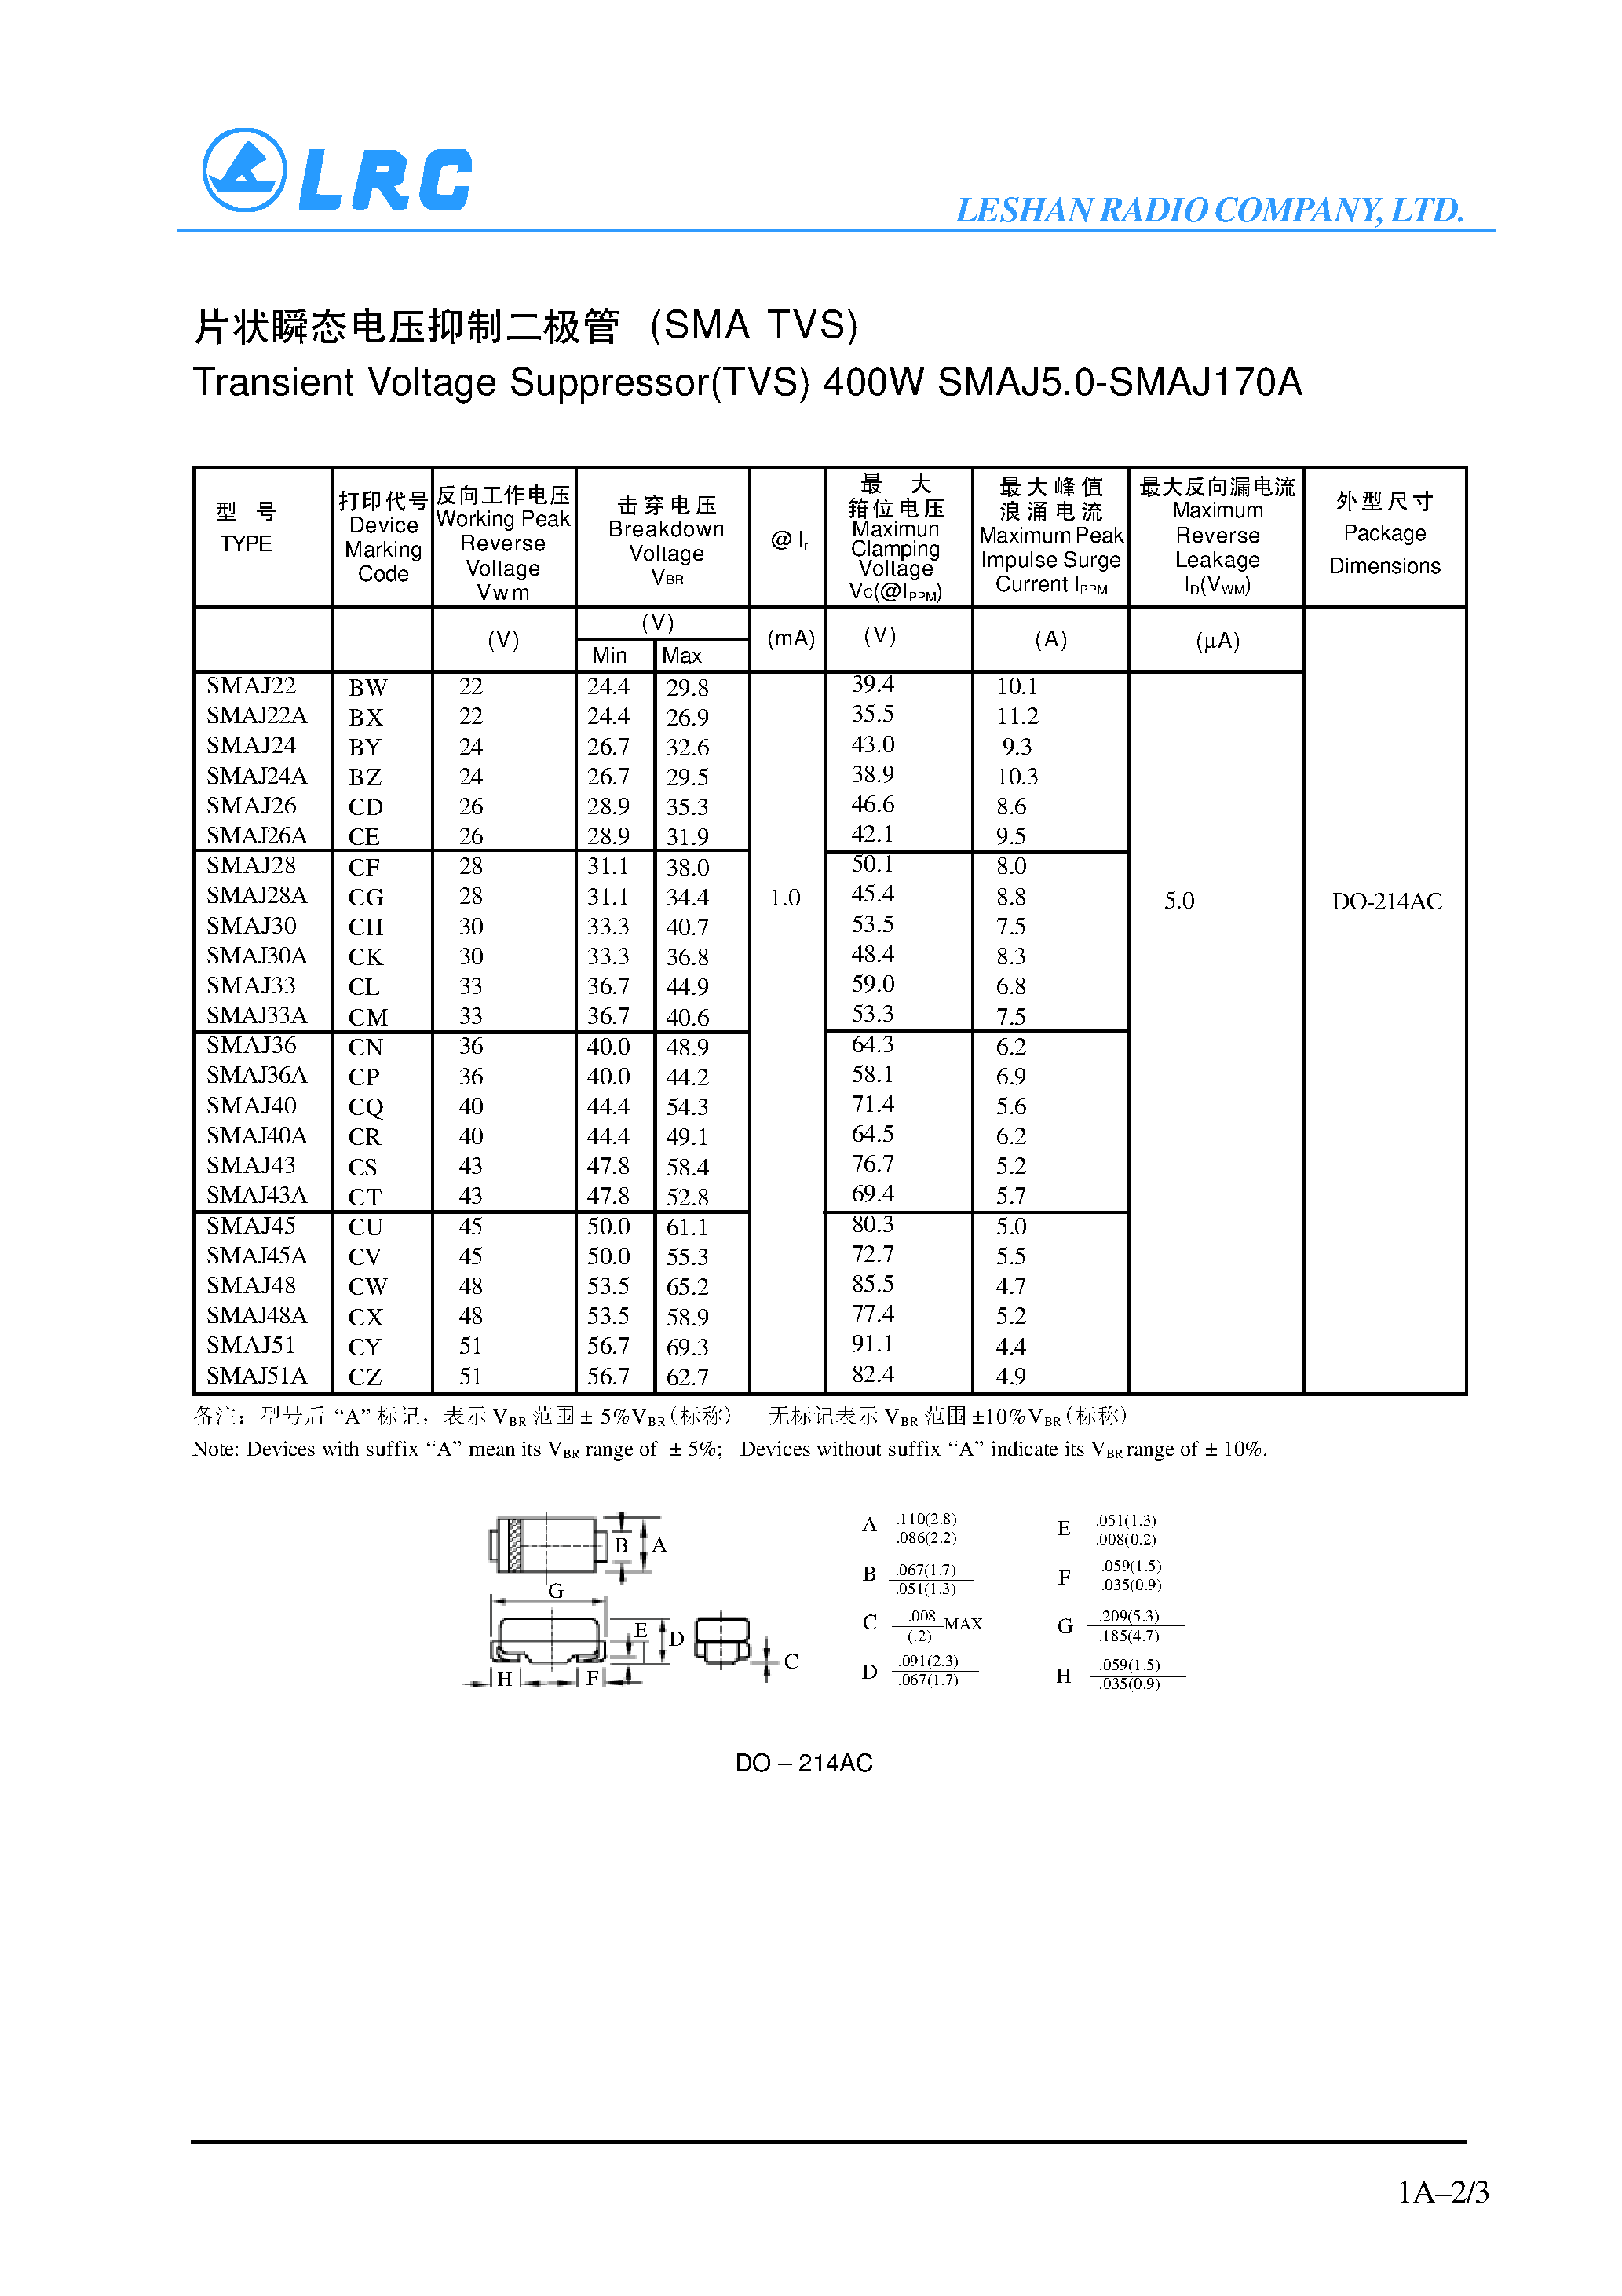 Даташит 400WSMAJ5.0 - Transient Voltage Suppressor(TVS)400W SMAJ5.0-SMAJ170A страница 2